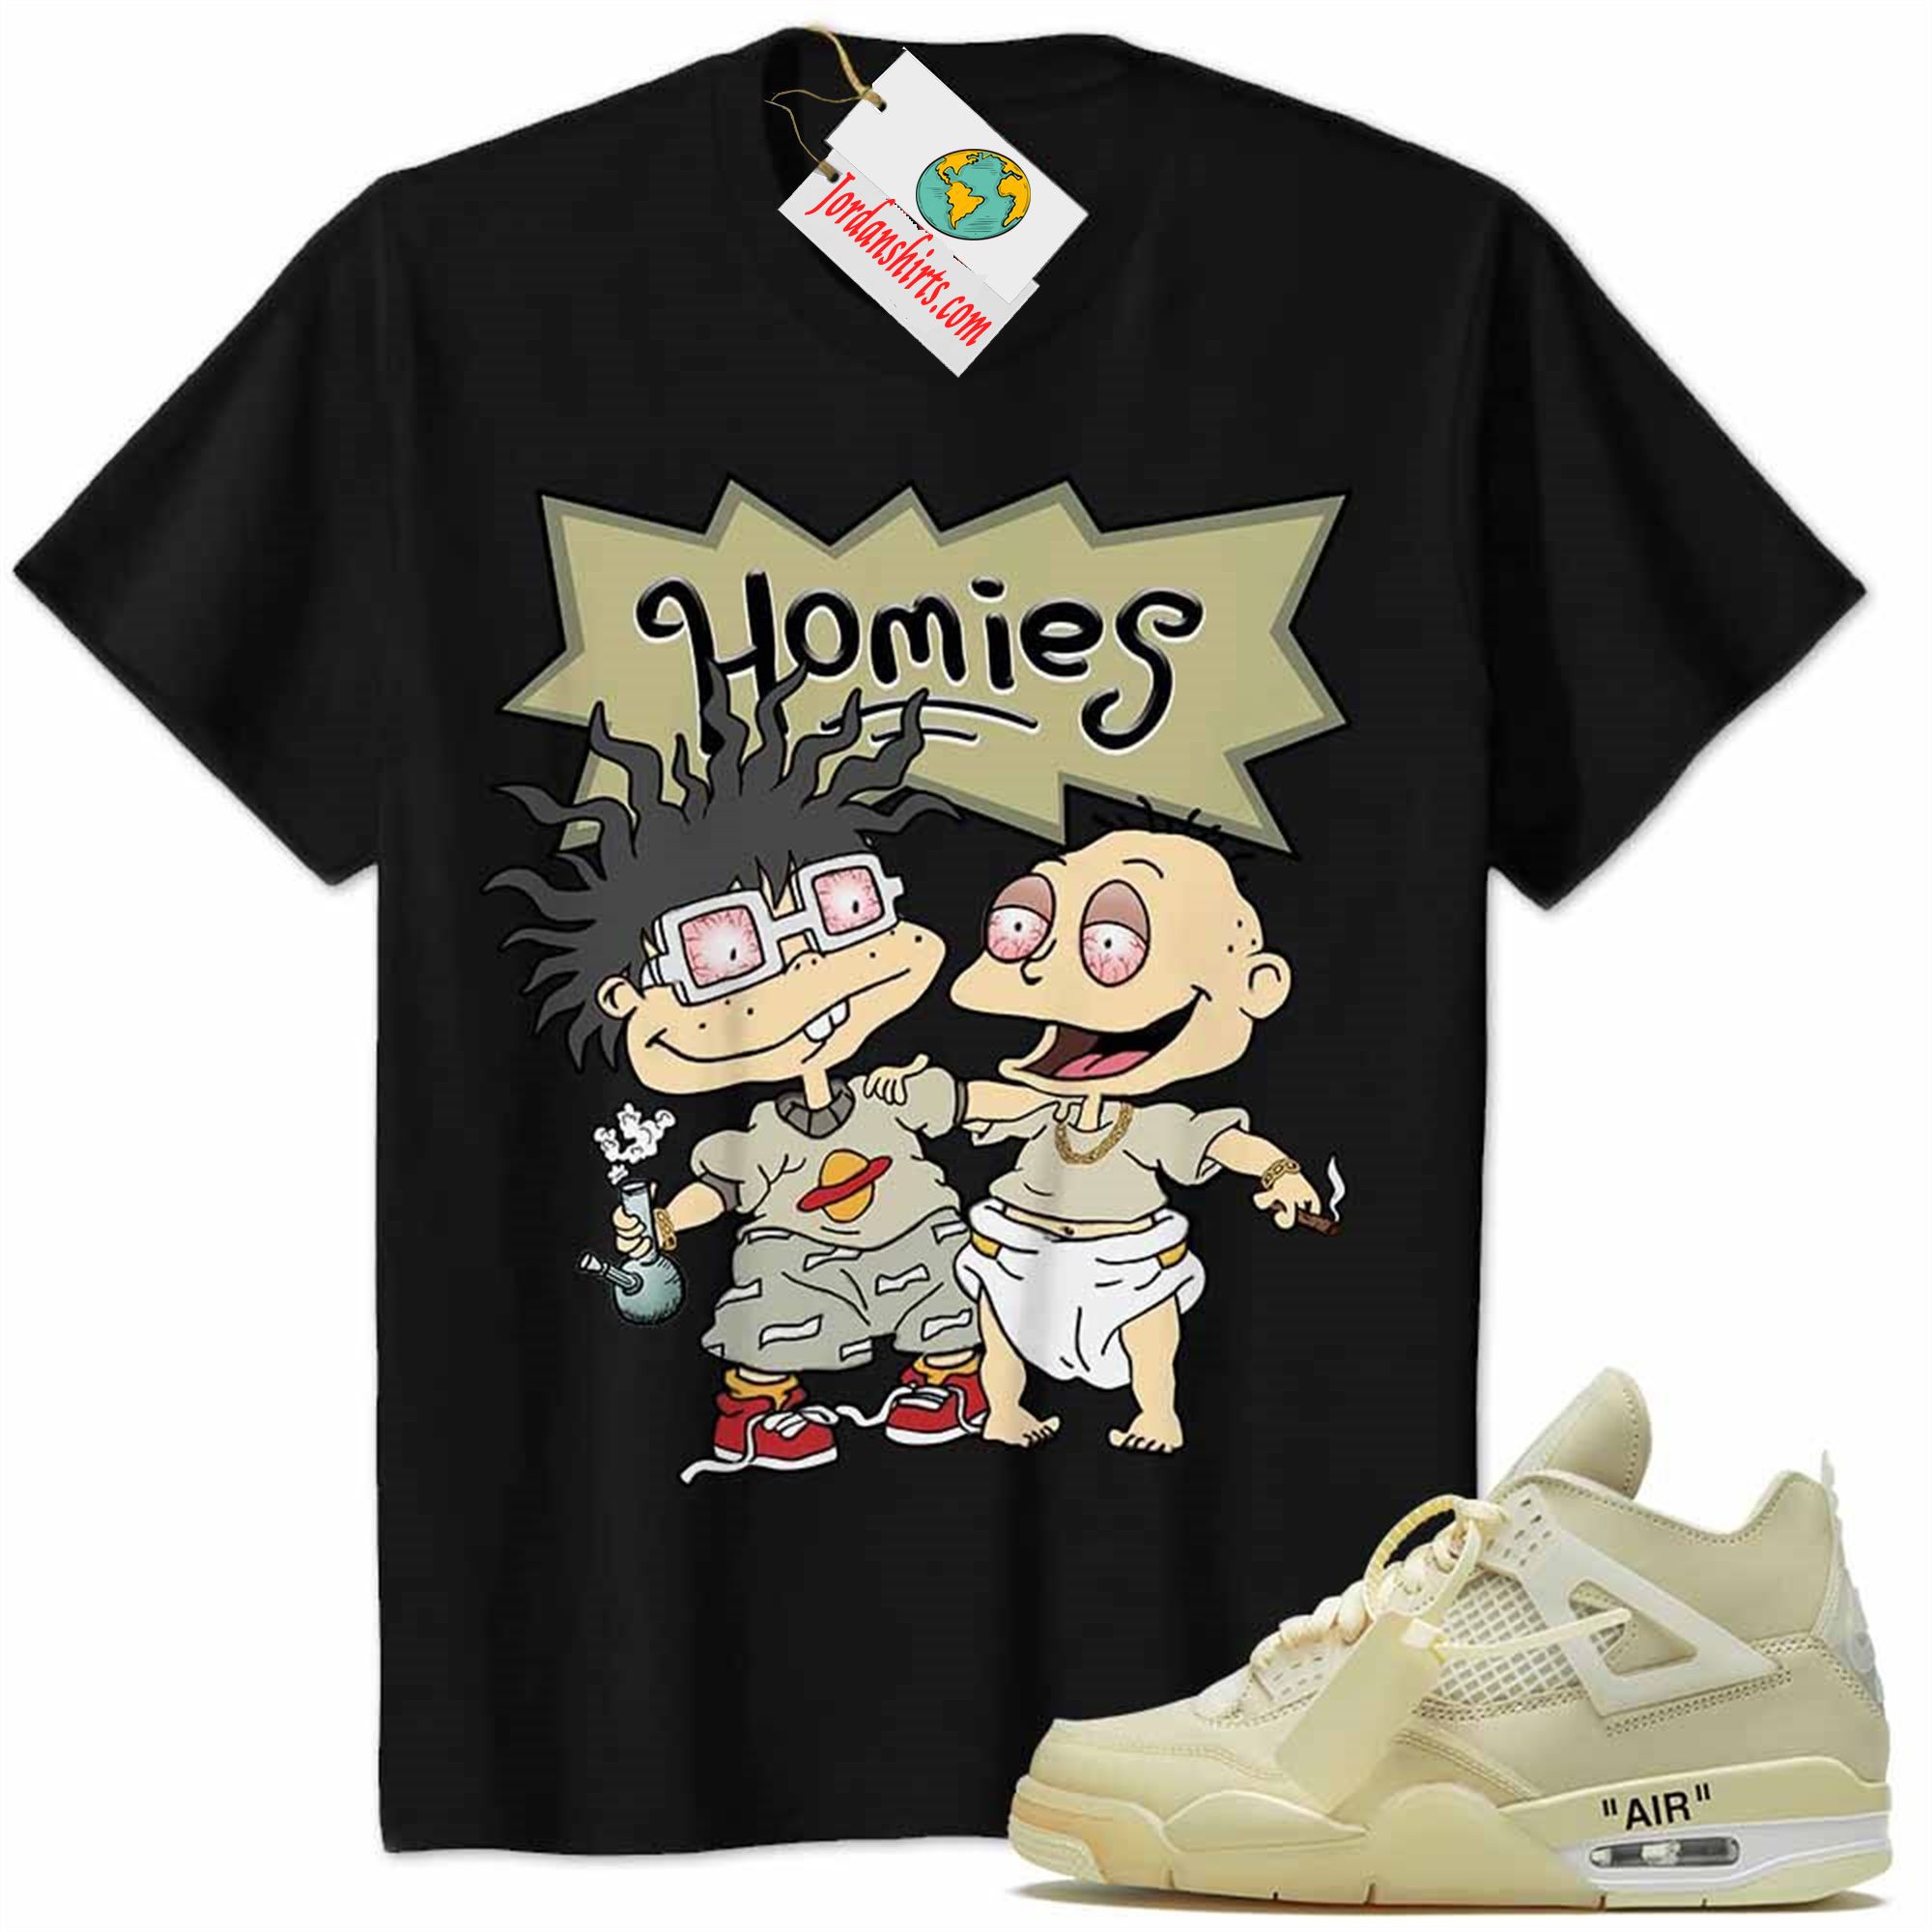 Jordan 4 Shirt, Jordan 4 Off-white Sail Shirt Hommies Tommy Pickles Chuckie Finster Rugrats Black Plus Size Up To 5xl